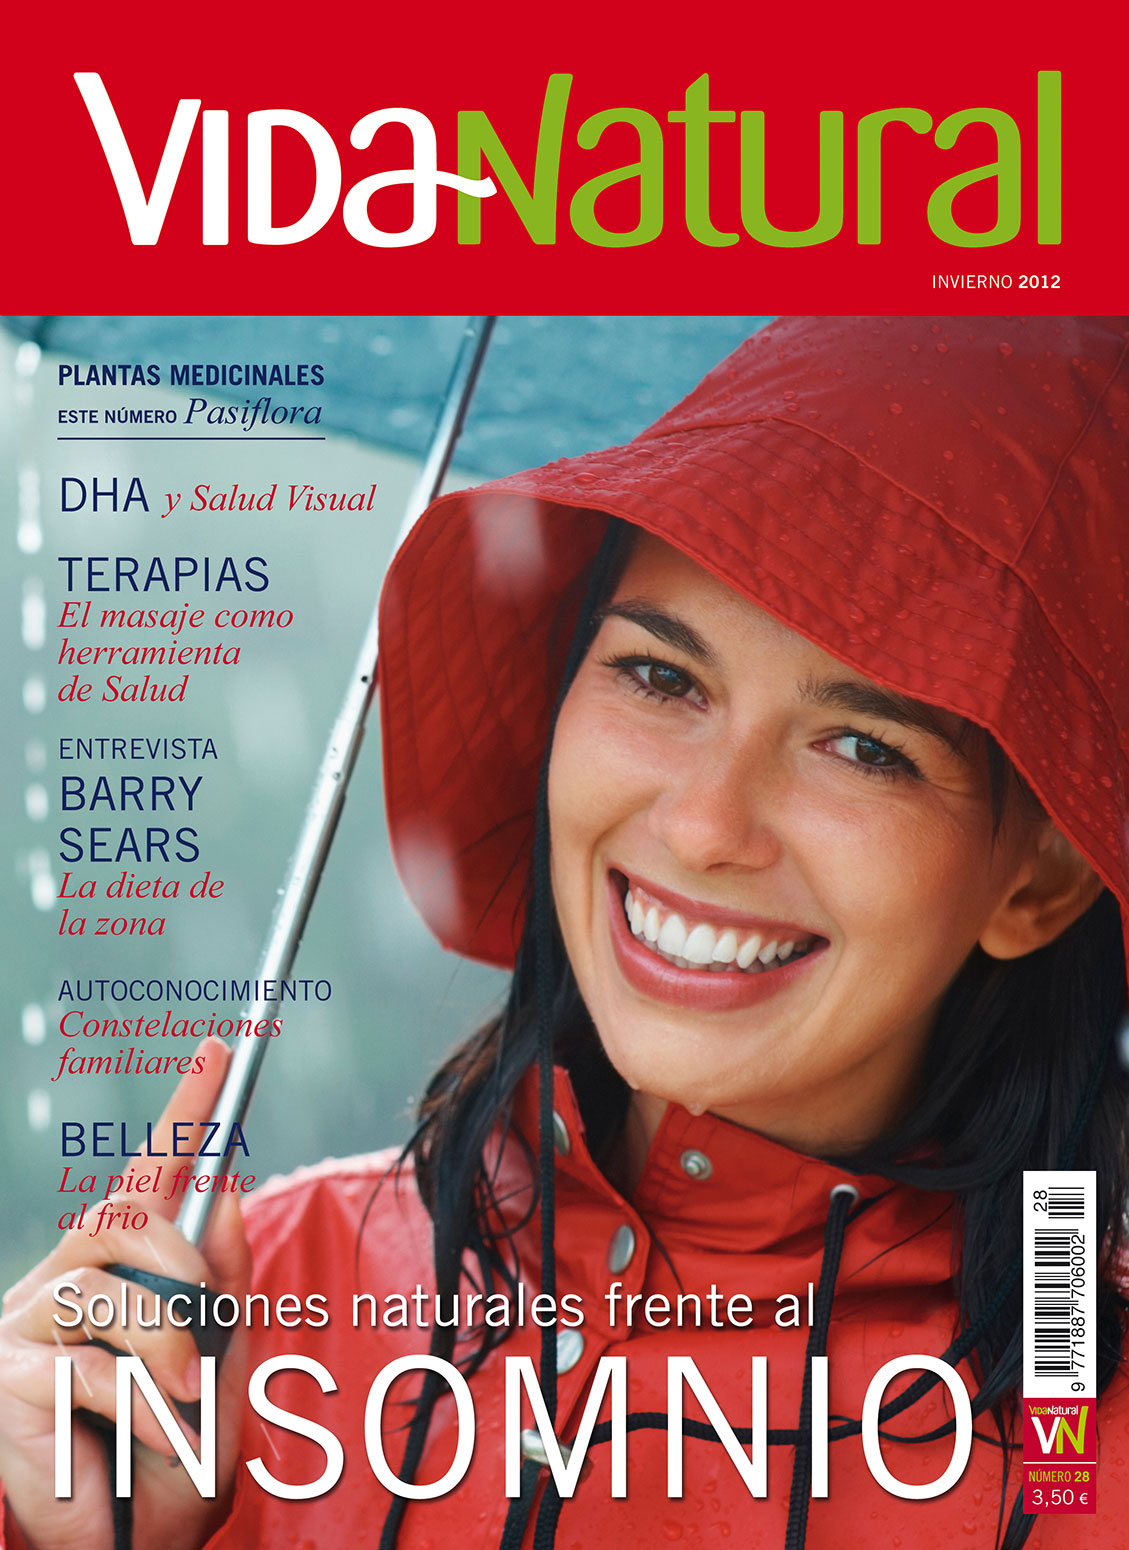 Revista Vida Natural nº 28 - Invierno de 2012